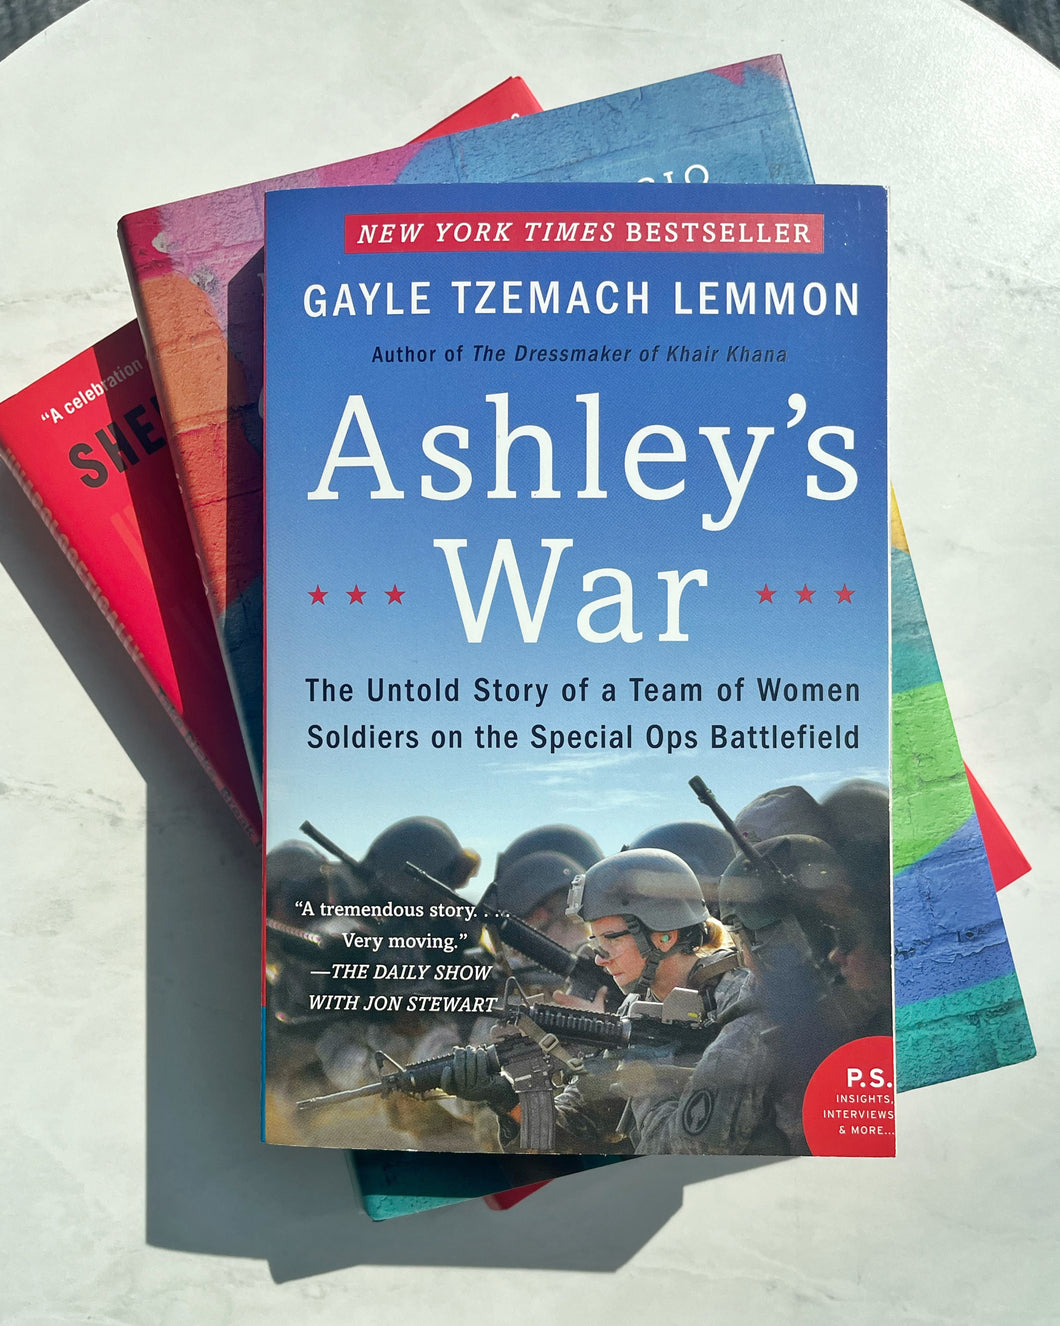 Ashley's War by Gayle Tzemach Lemmon